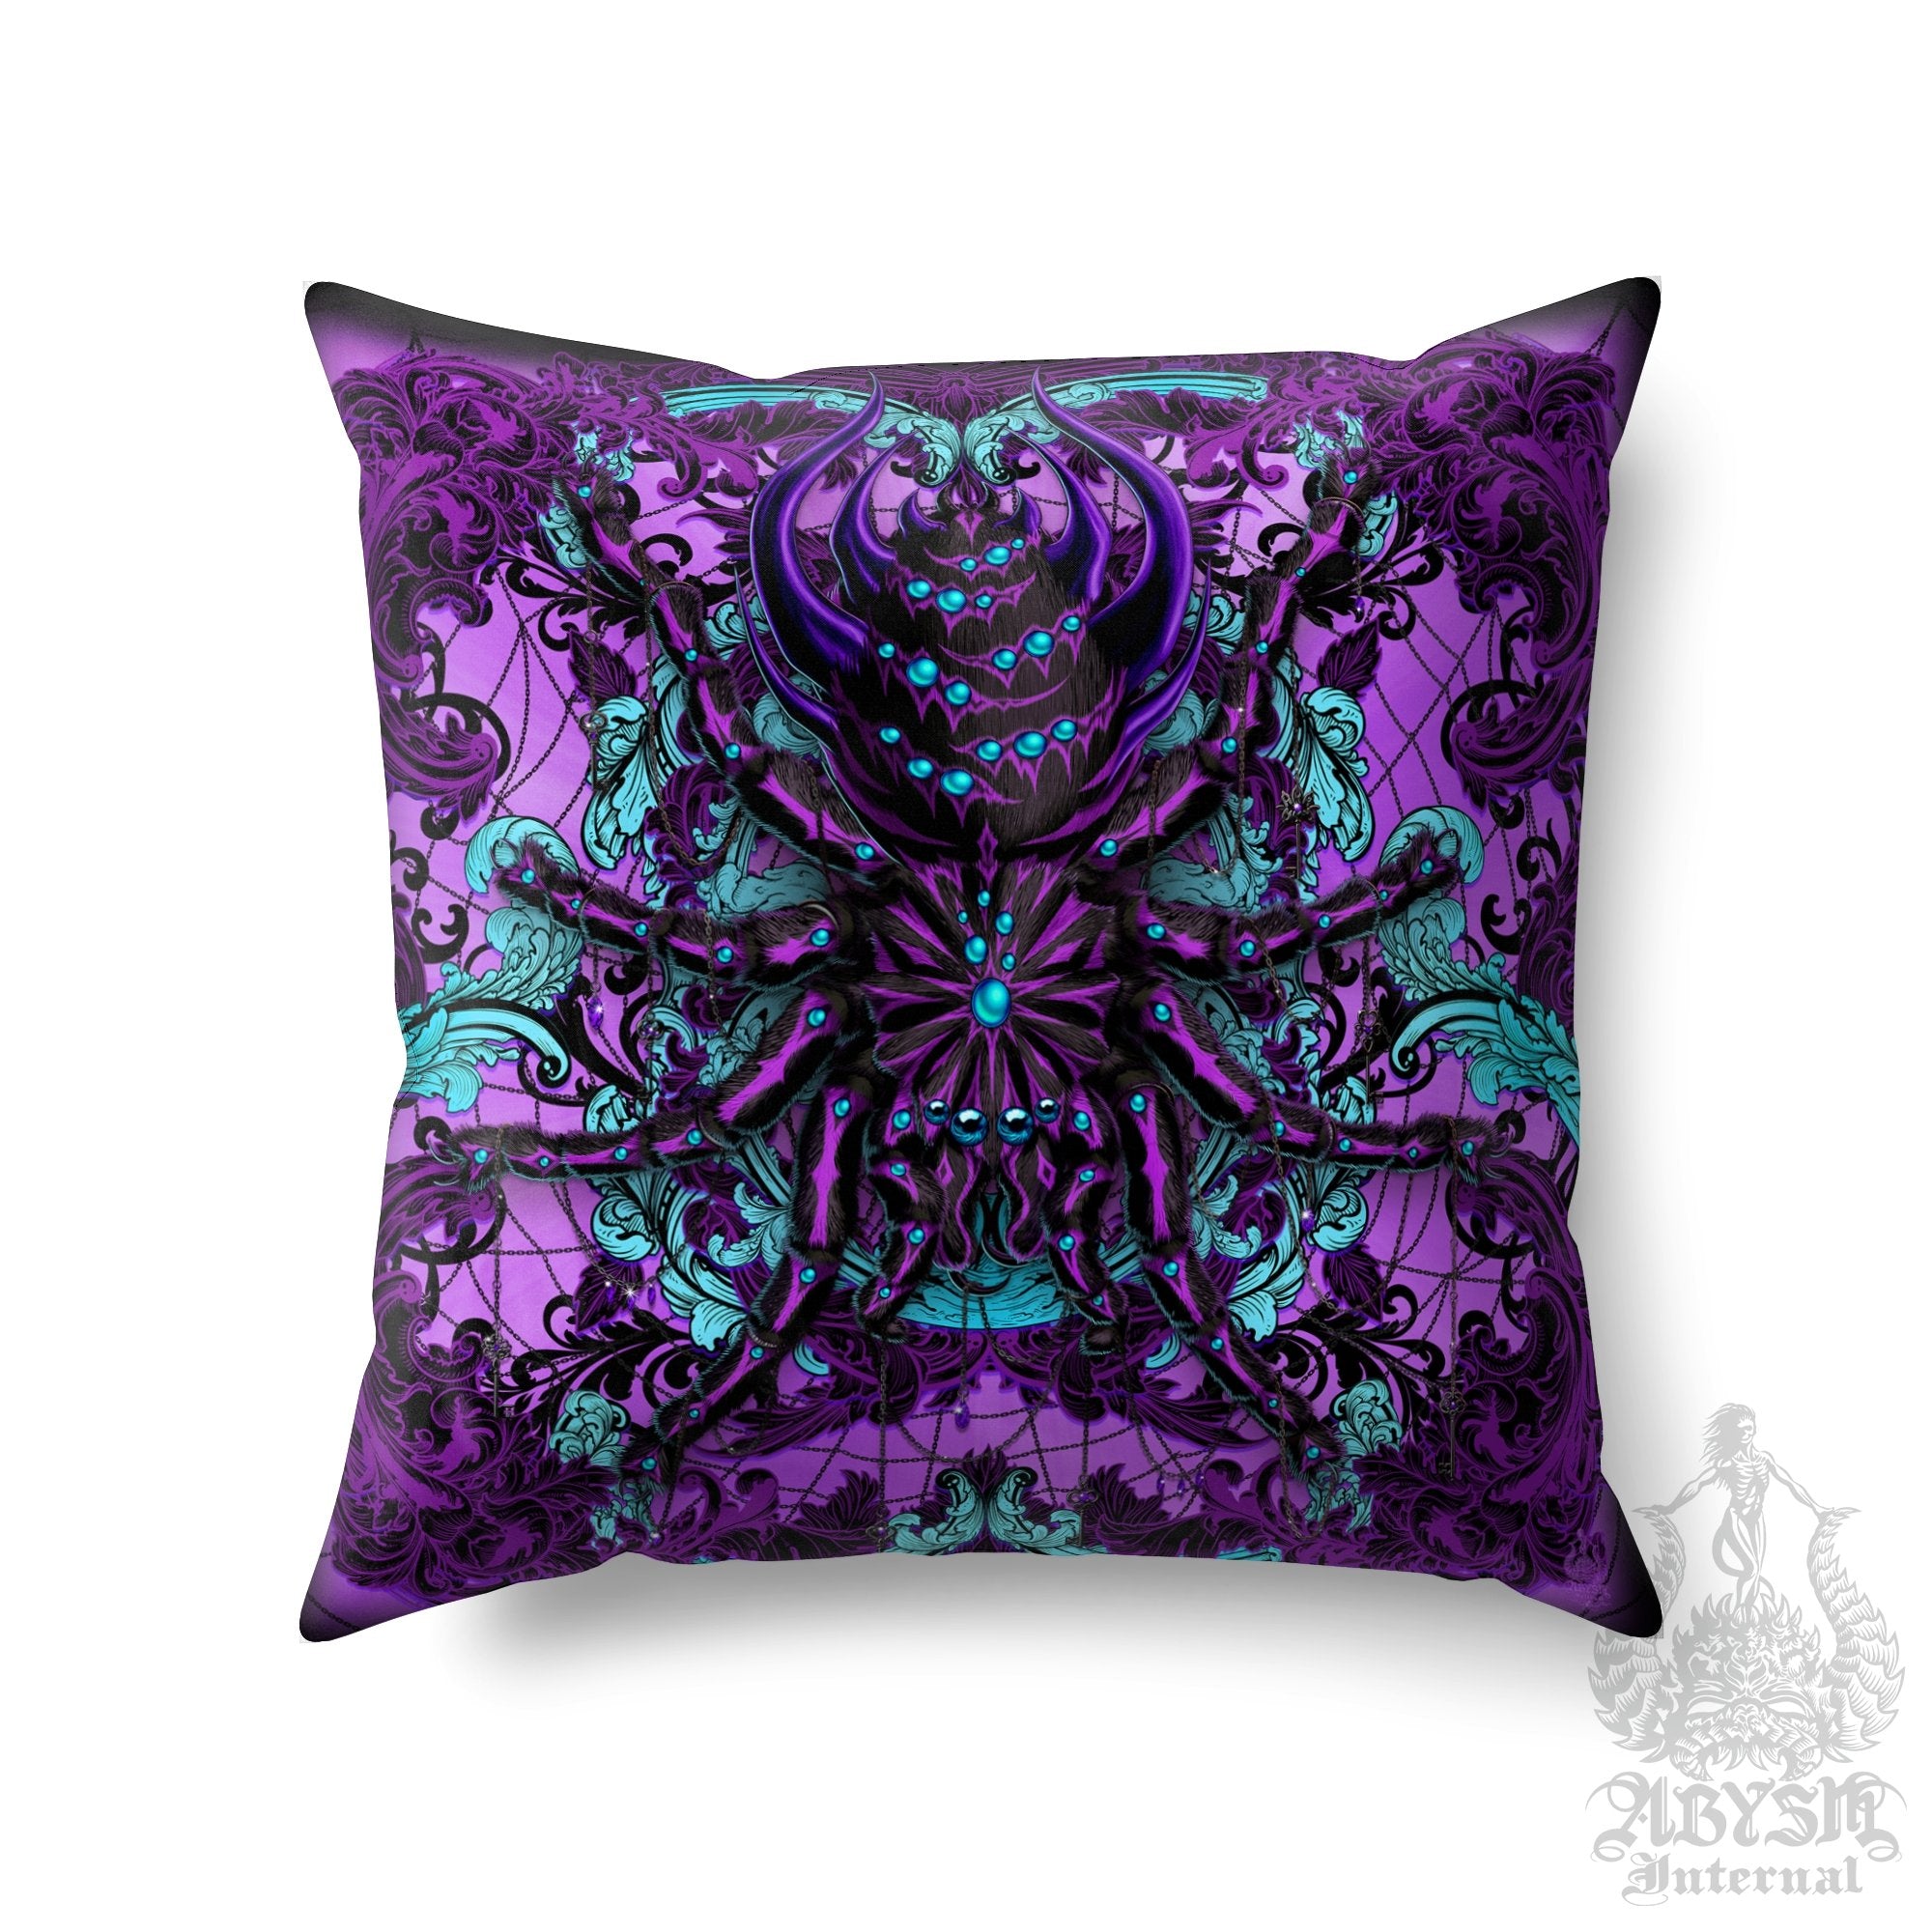 Pastel Goth Throw Pillow, Decorative Accent Cushion, Gothic Room Decor, Alternative Home - Tarantula, Spider, Black and Purple - Abysm Internal